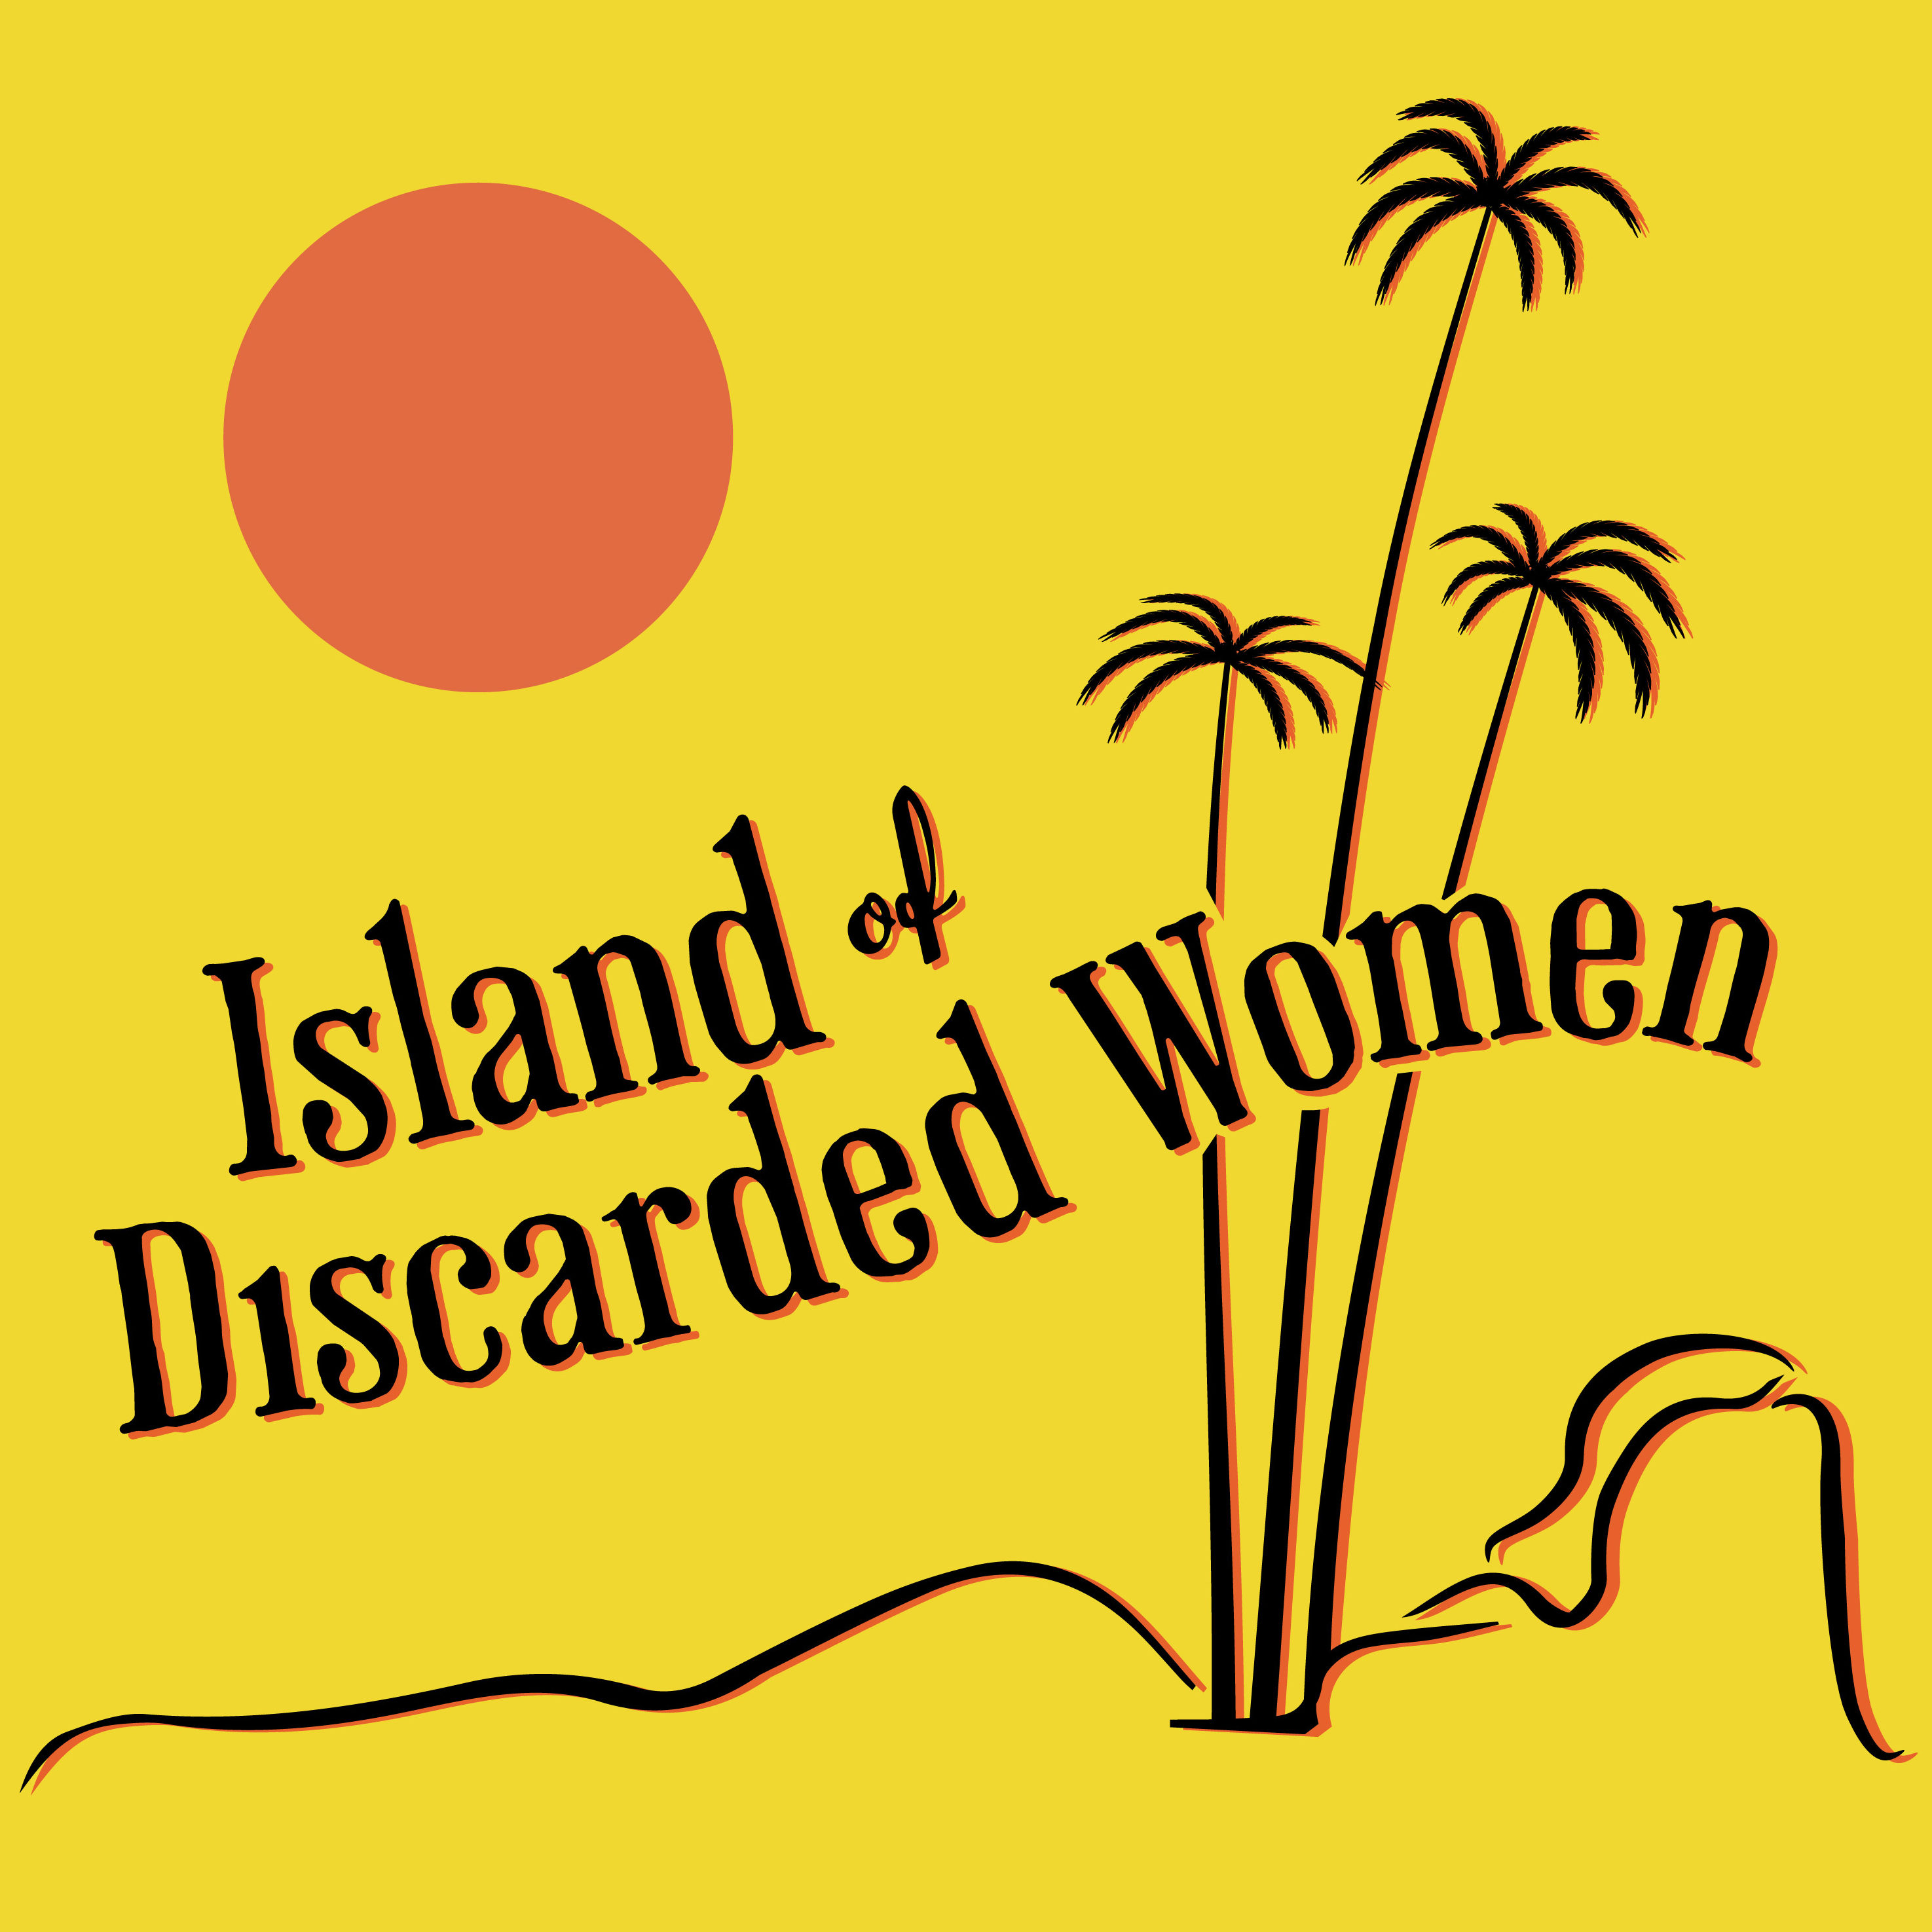 Island of Discarded Women